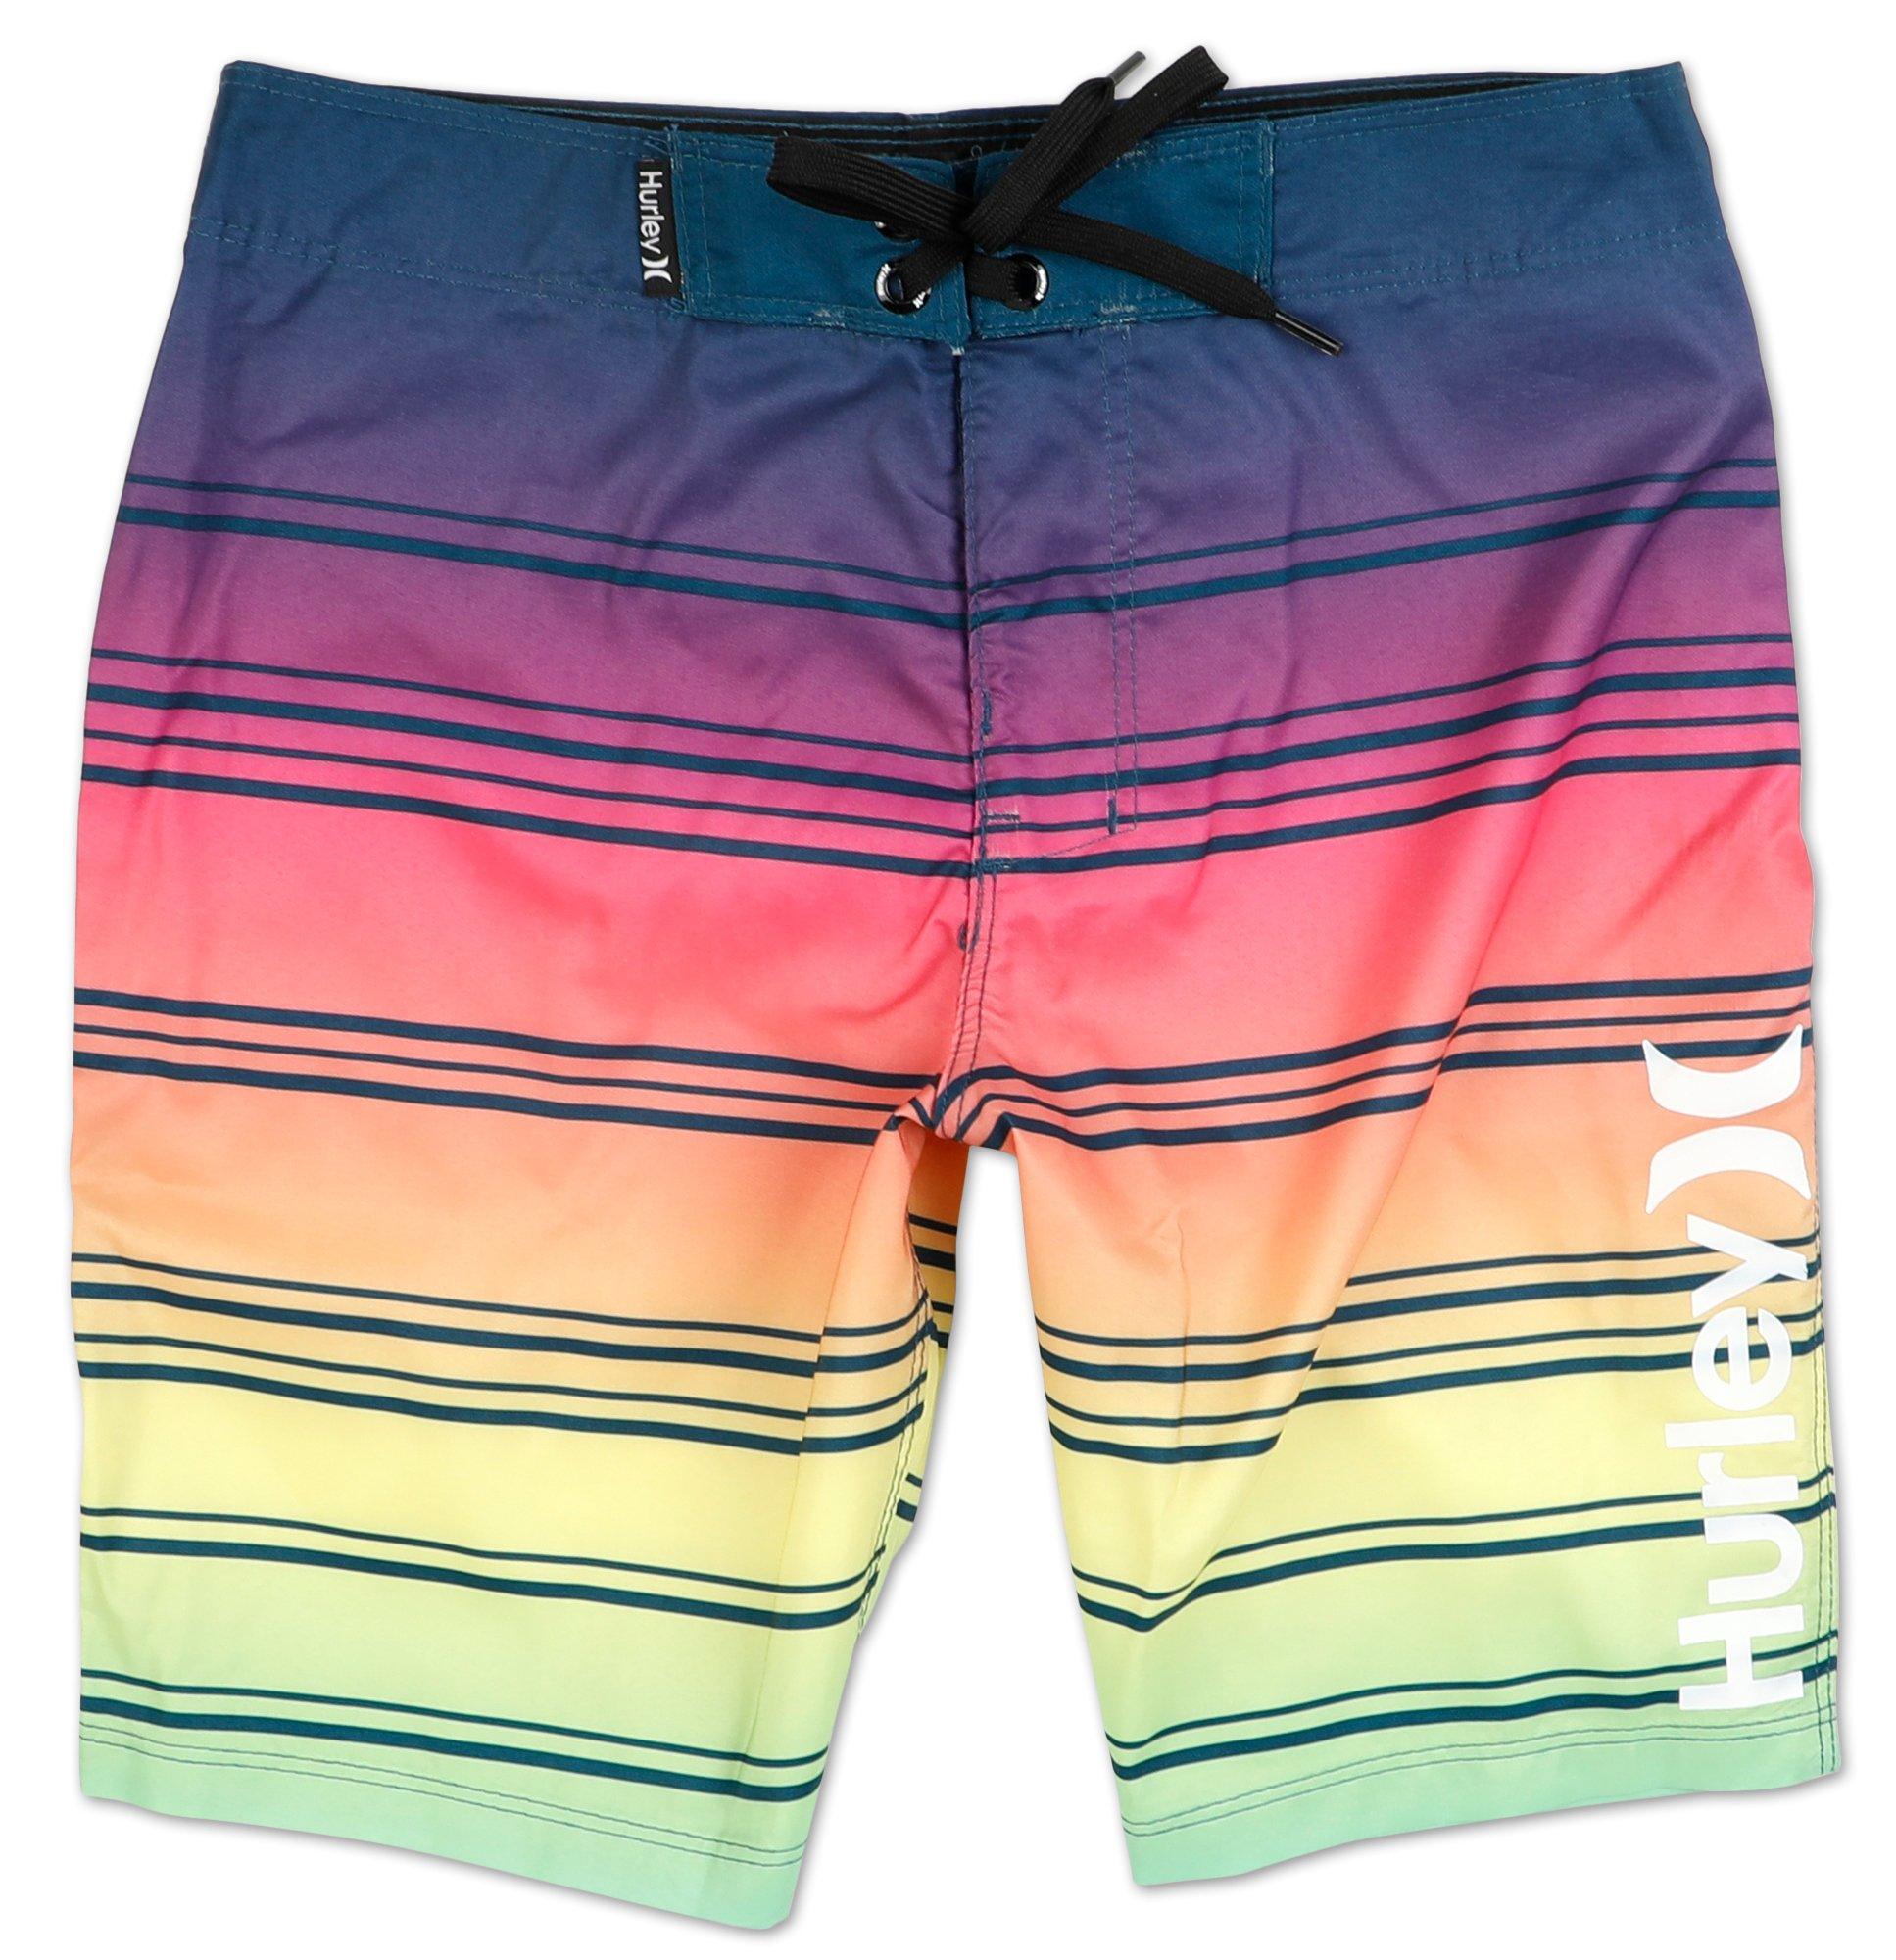 Boys Ombre Swim Shorts